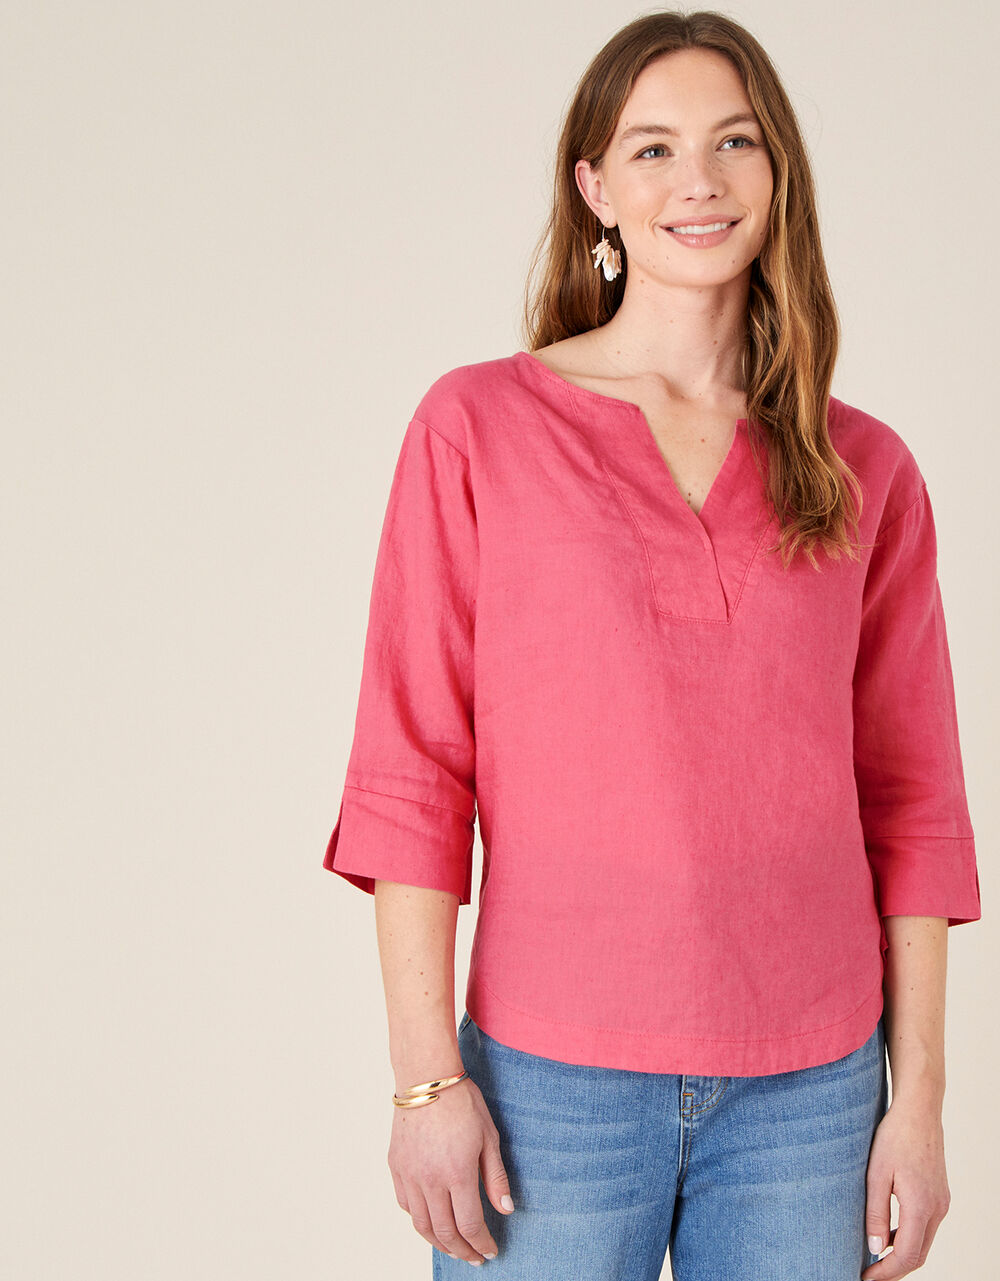 Women Women's Clothing | Daisy Plain T-Shirt in Pure Linen Red - QM40484